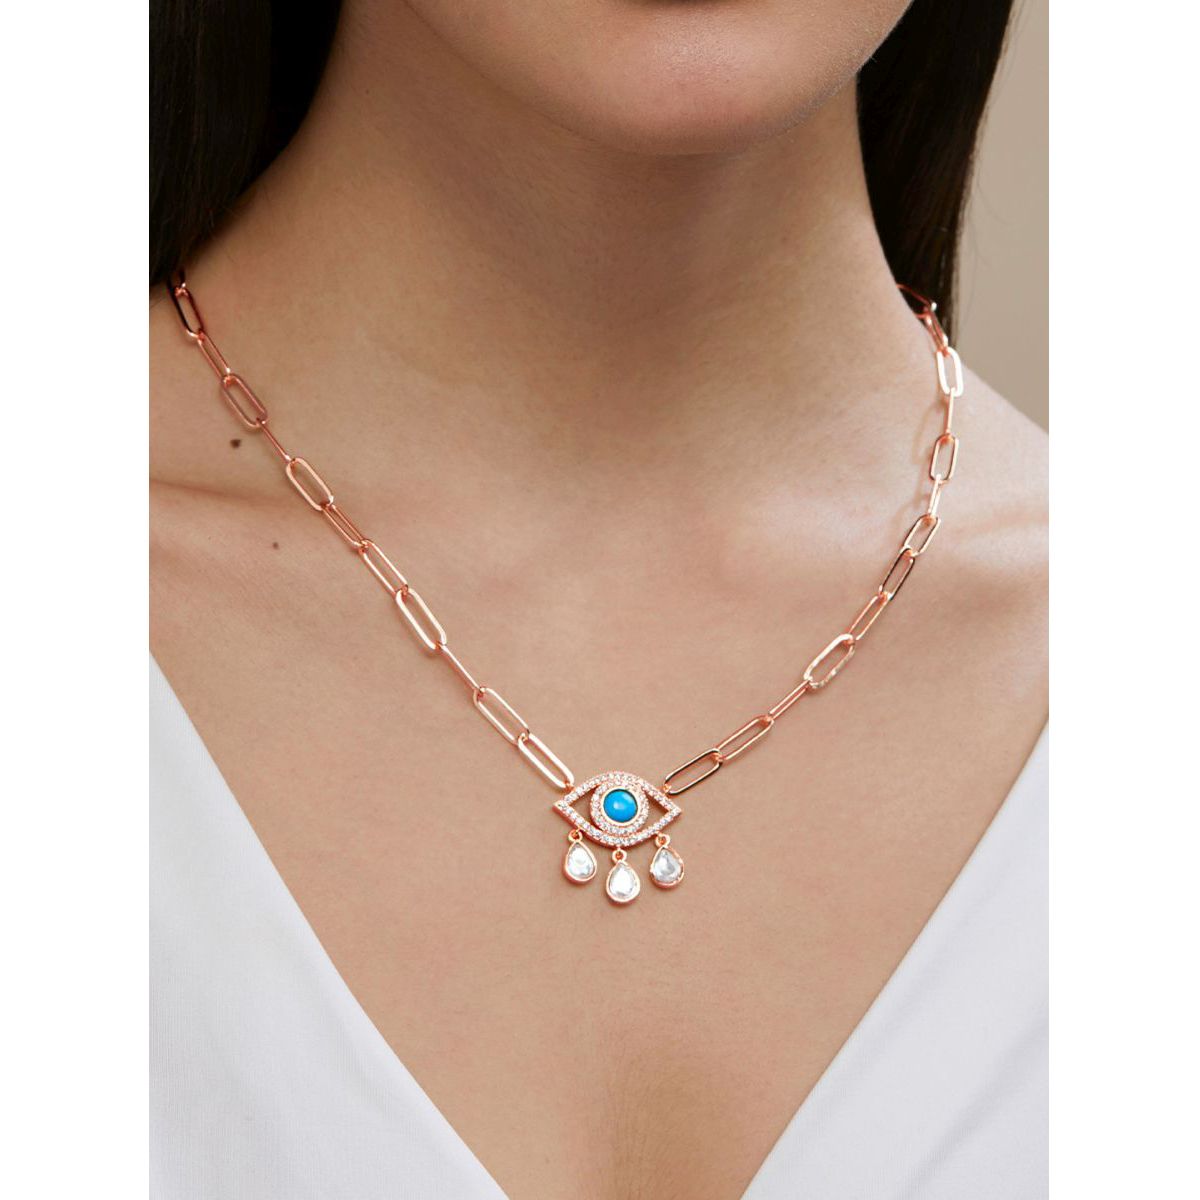 Evil Eye Necklace Alloy Crystal Chain Jewelry Choker Necklace Gift Pendant  Women | eBay